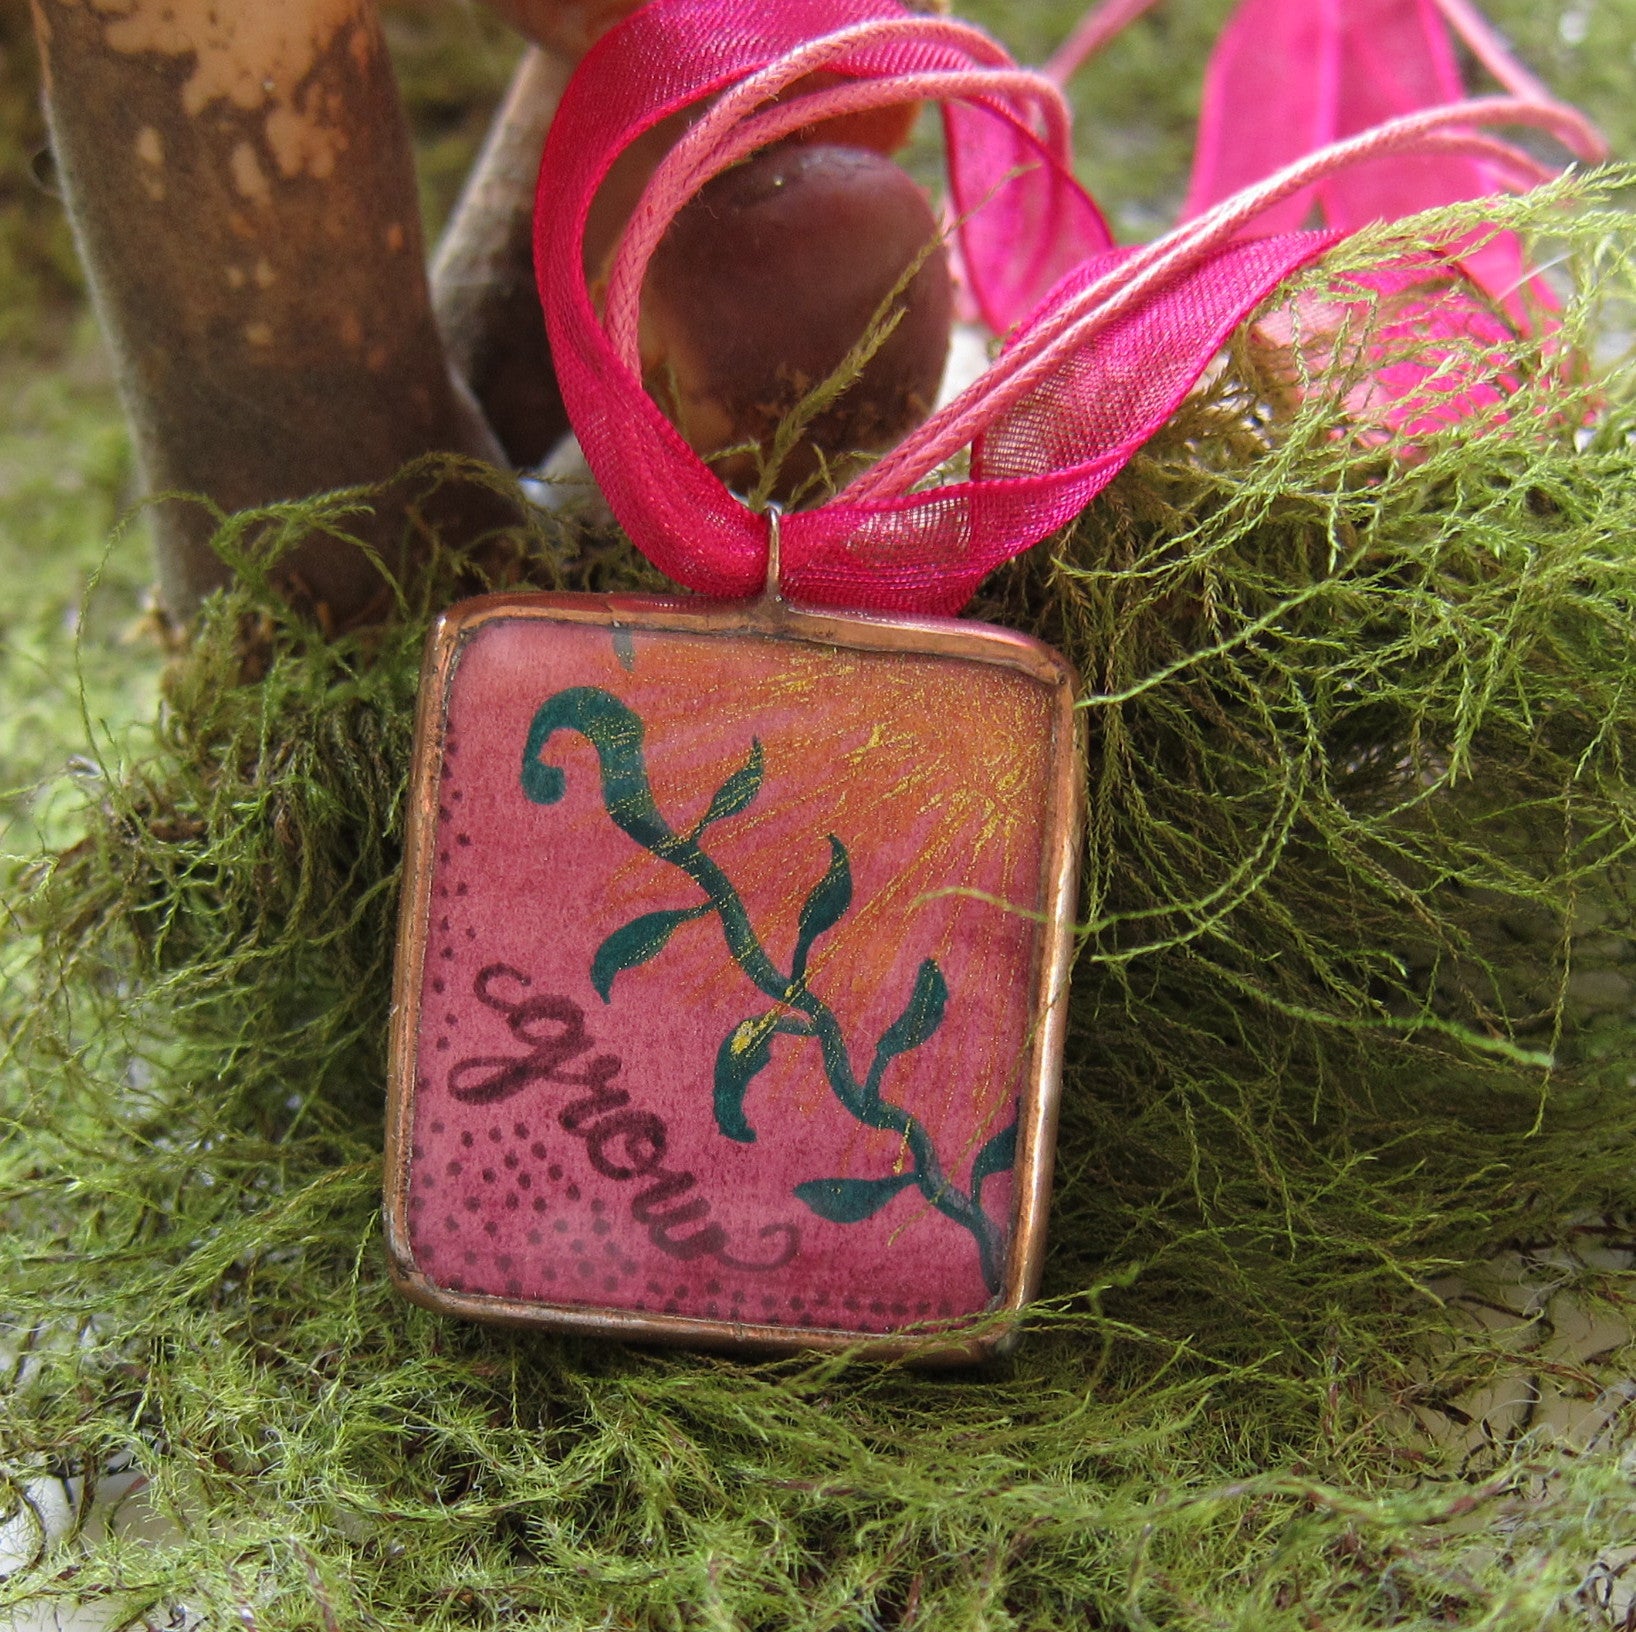 Soldered glass pendant necklace with leaf artwork